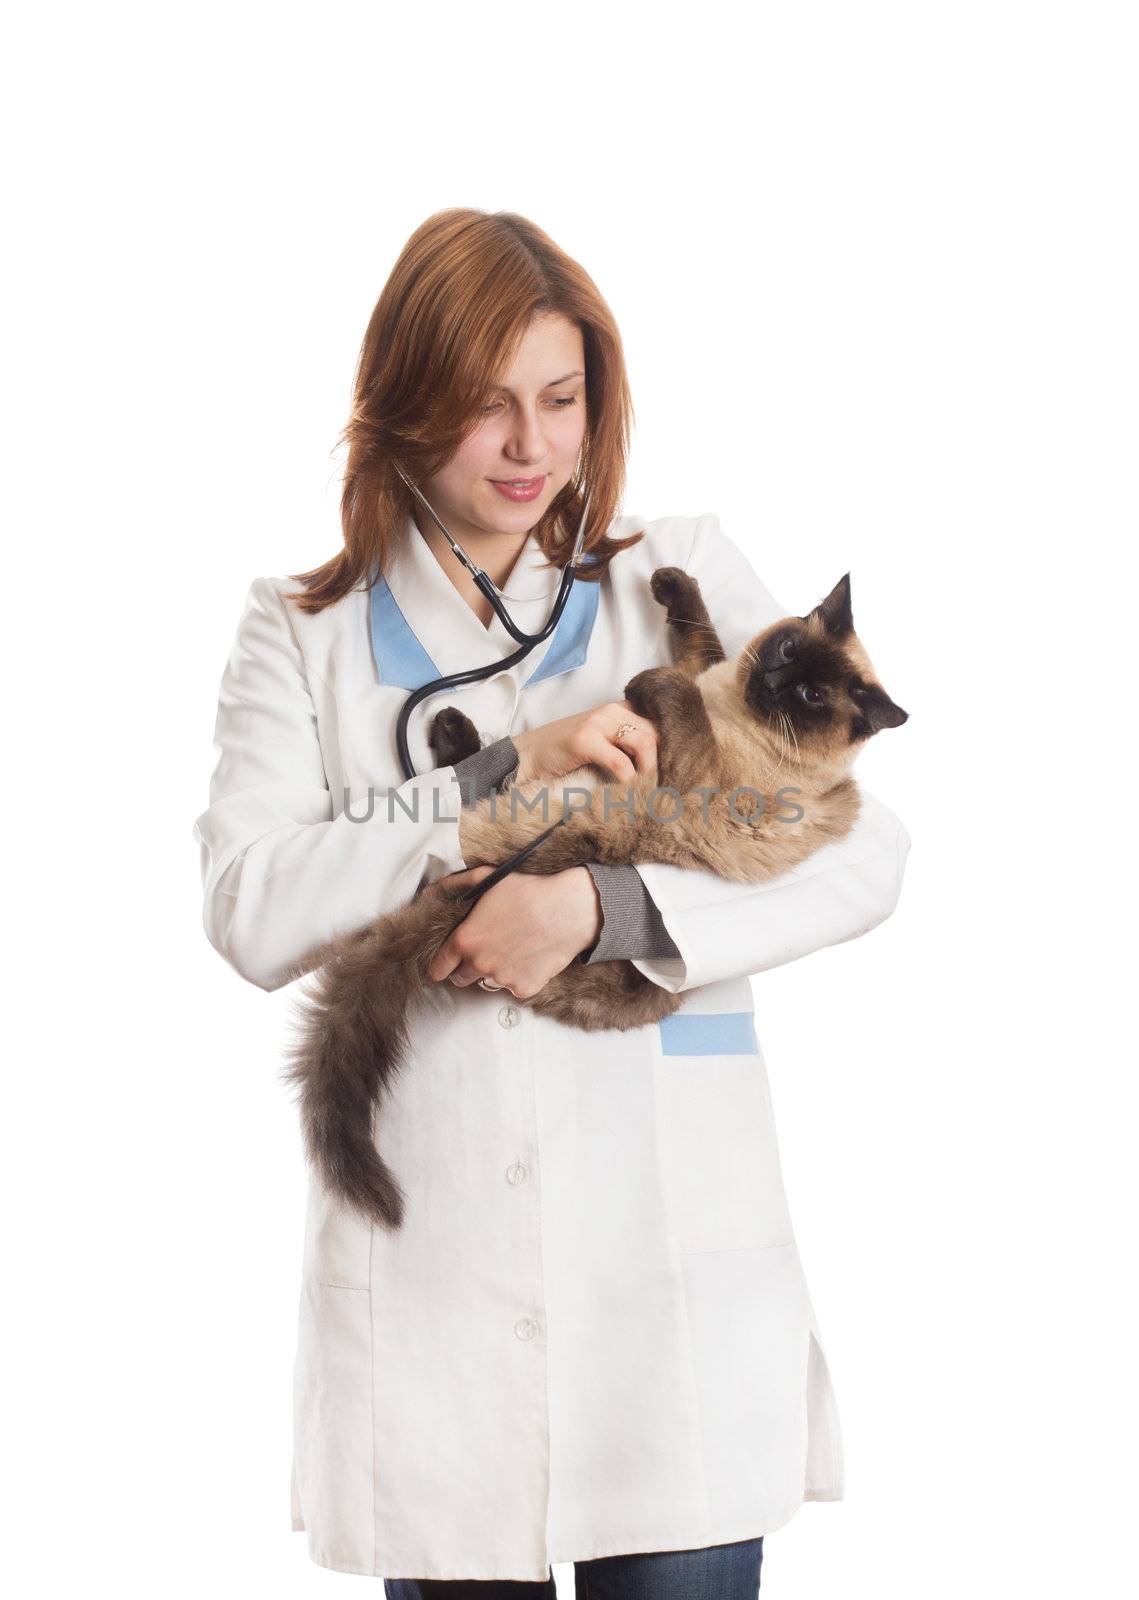 veterinarian cat listens through a stethoscope